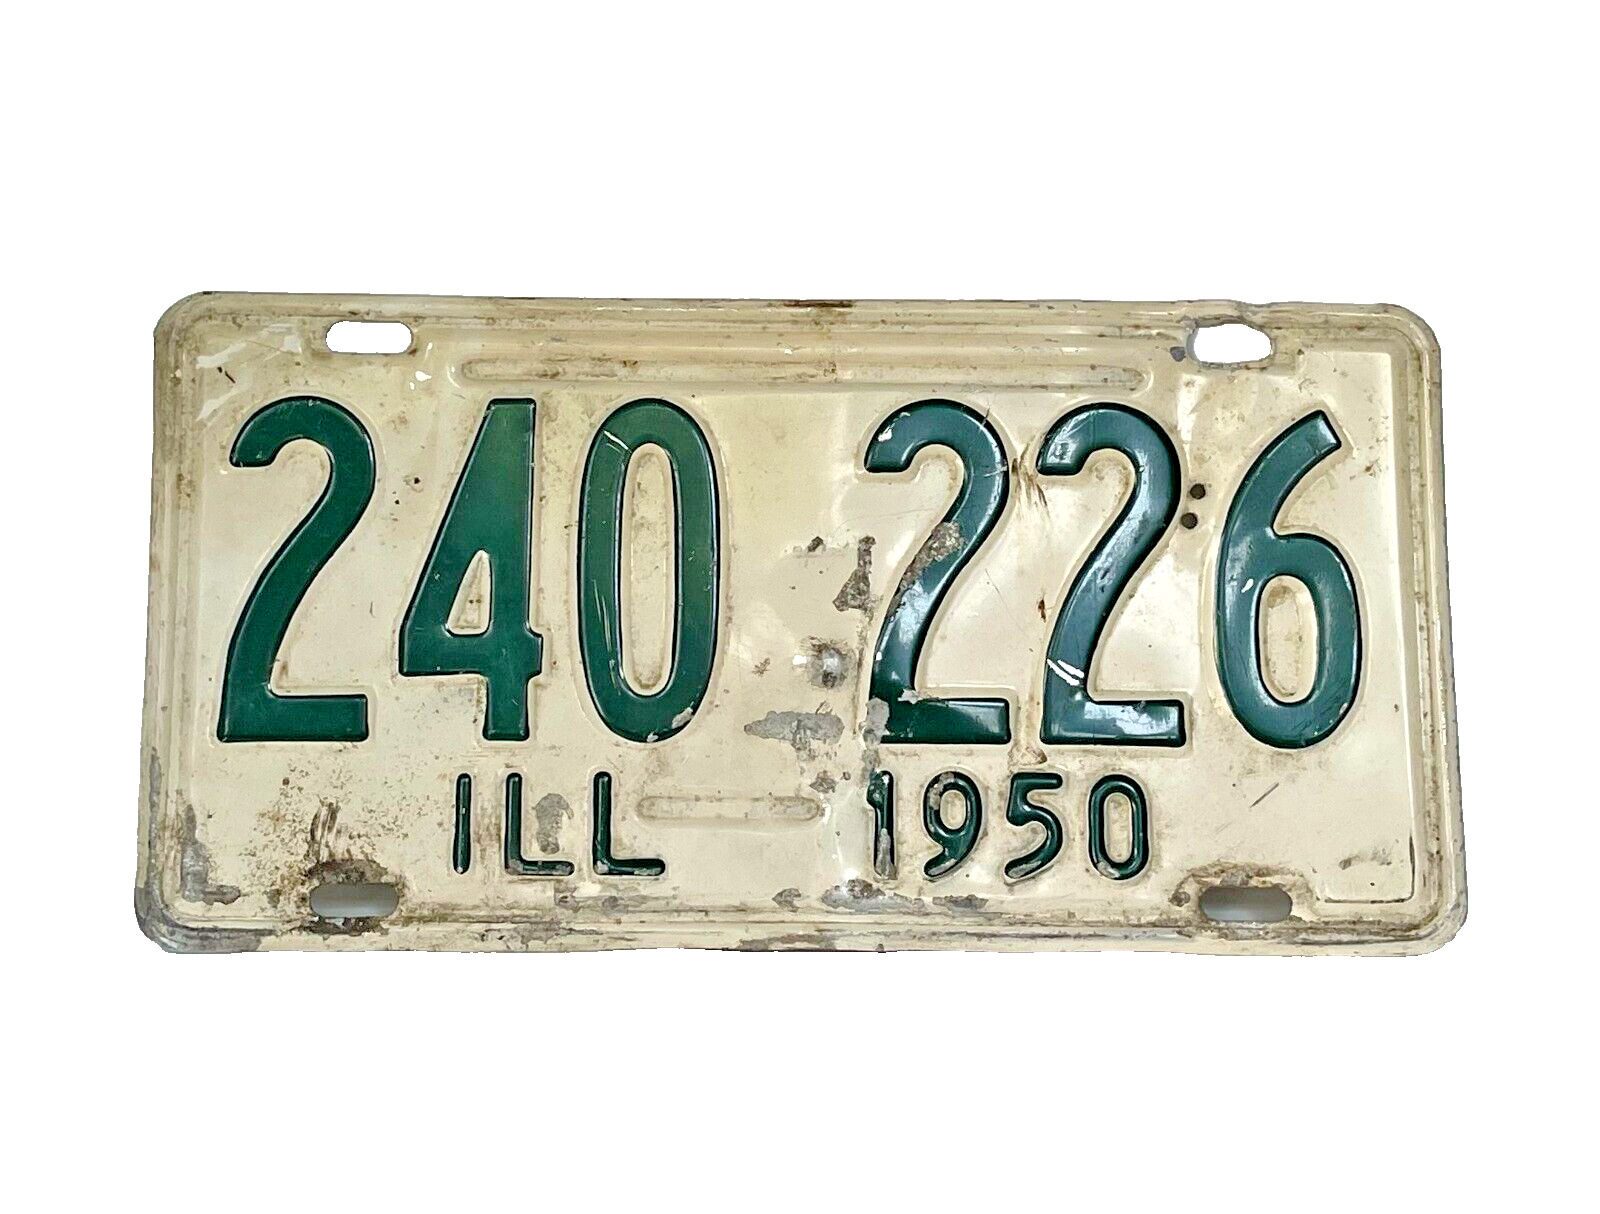 ILL 1950  - vintage license plate